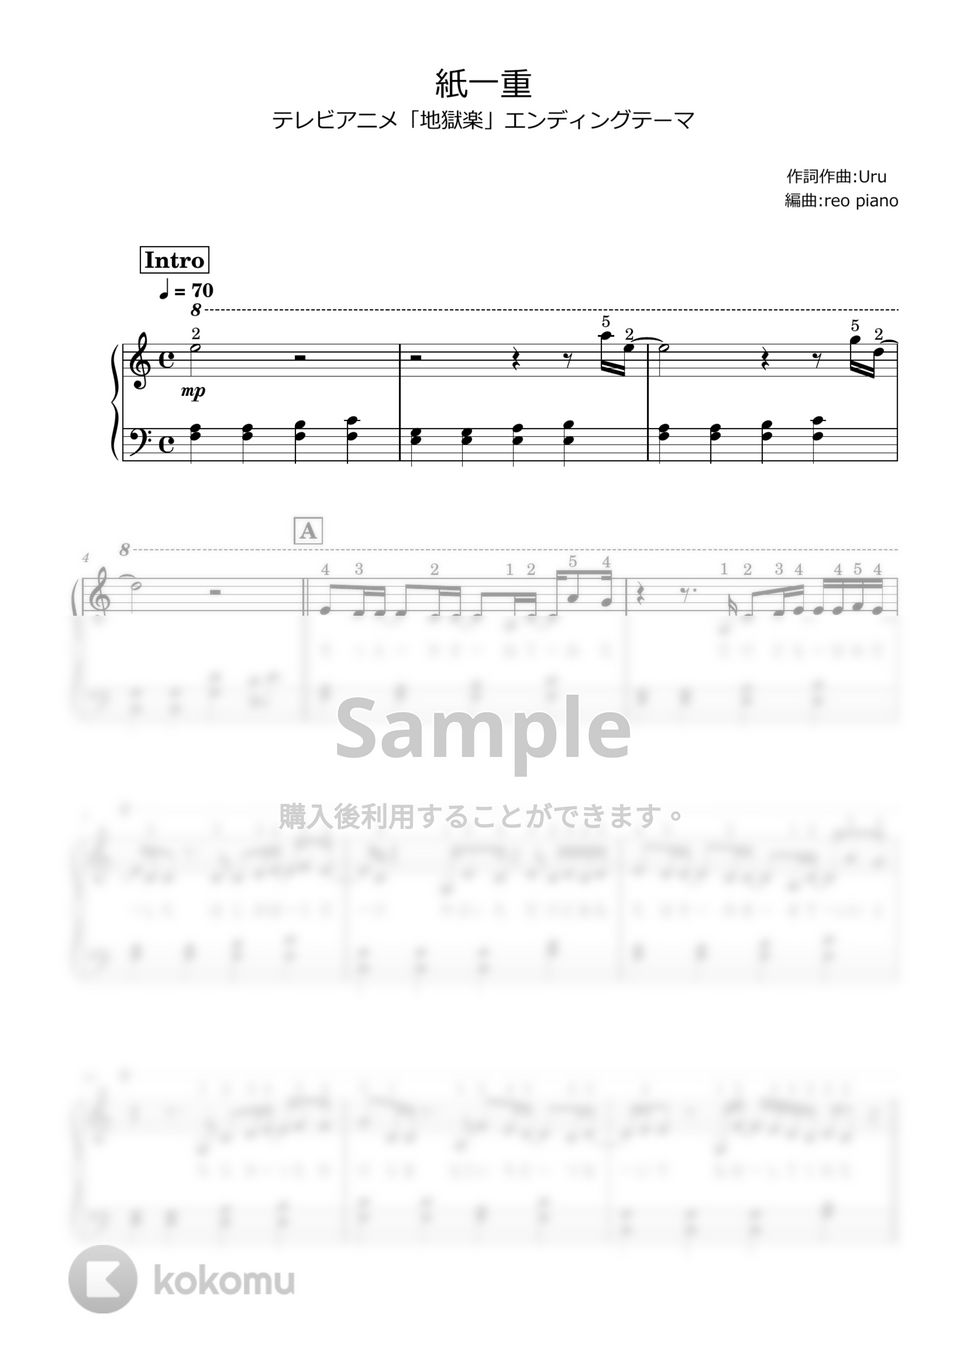 Uru - 紙一重/初級 (ハ長調/歌詞付き/指番号付き/地獄楽/ピアノ) by reo piano